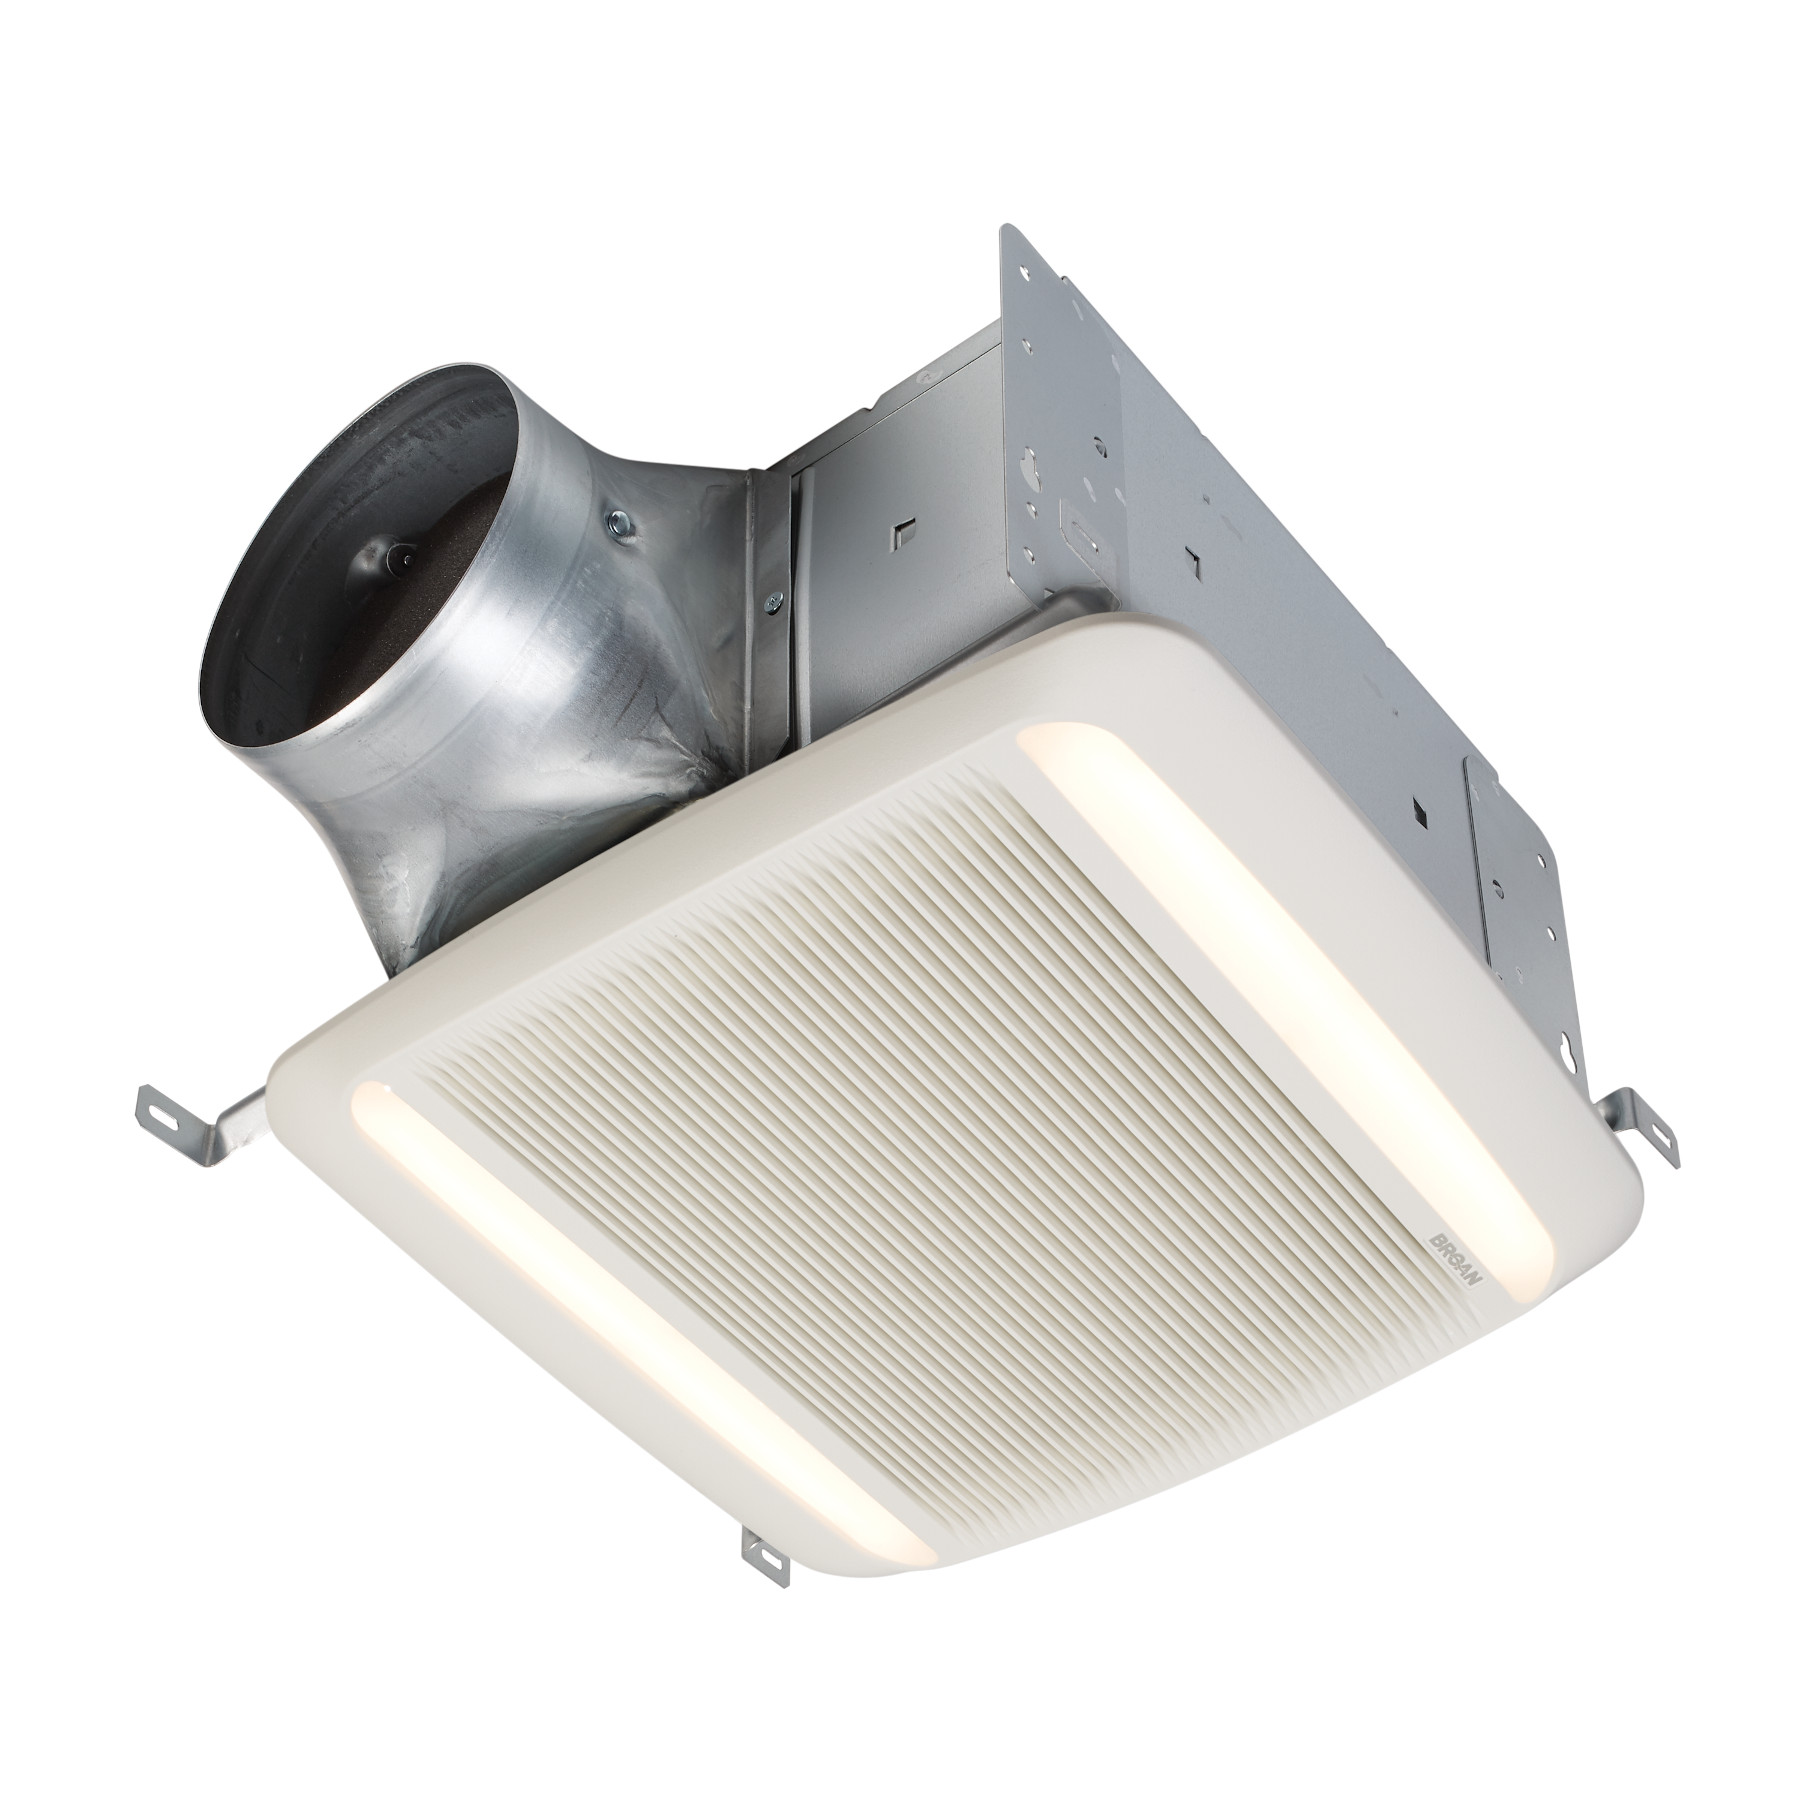 Broan® 110-130-150 Selectable CFM Ventilation fan with LED light, <0.3-0.4-0.7 Sones, ENERGY STAR Certified